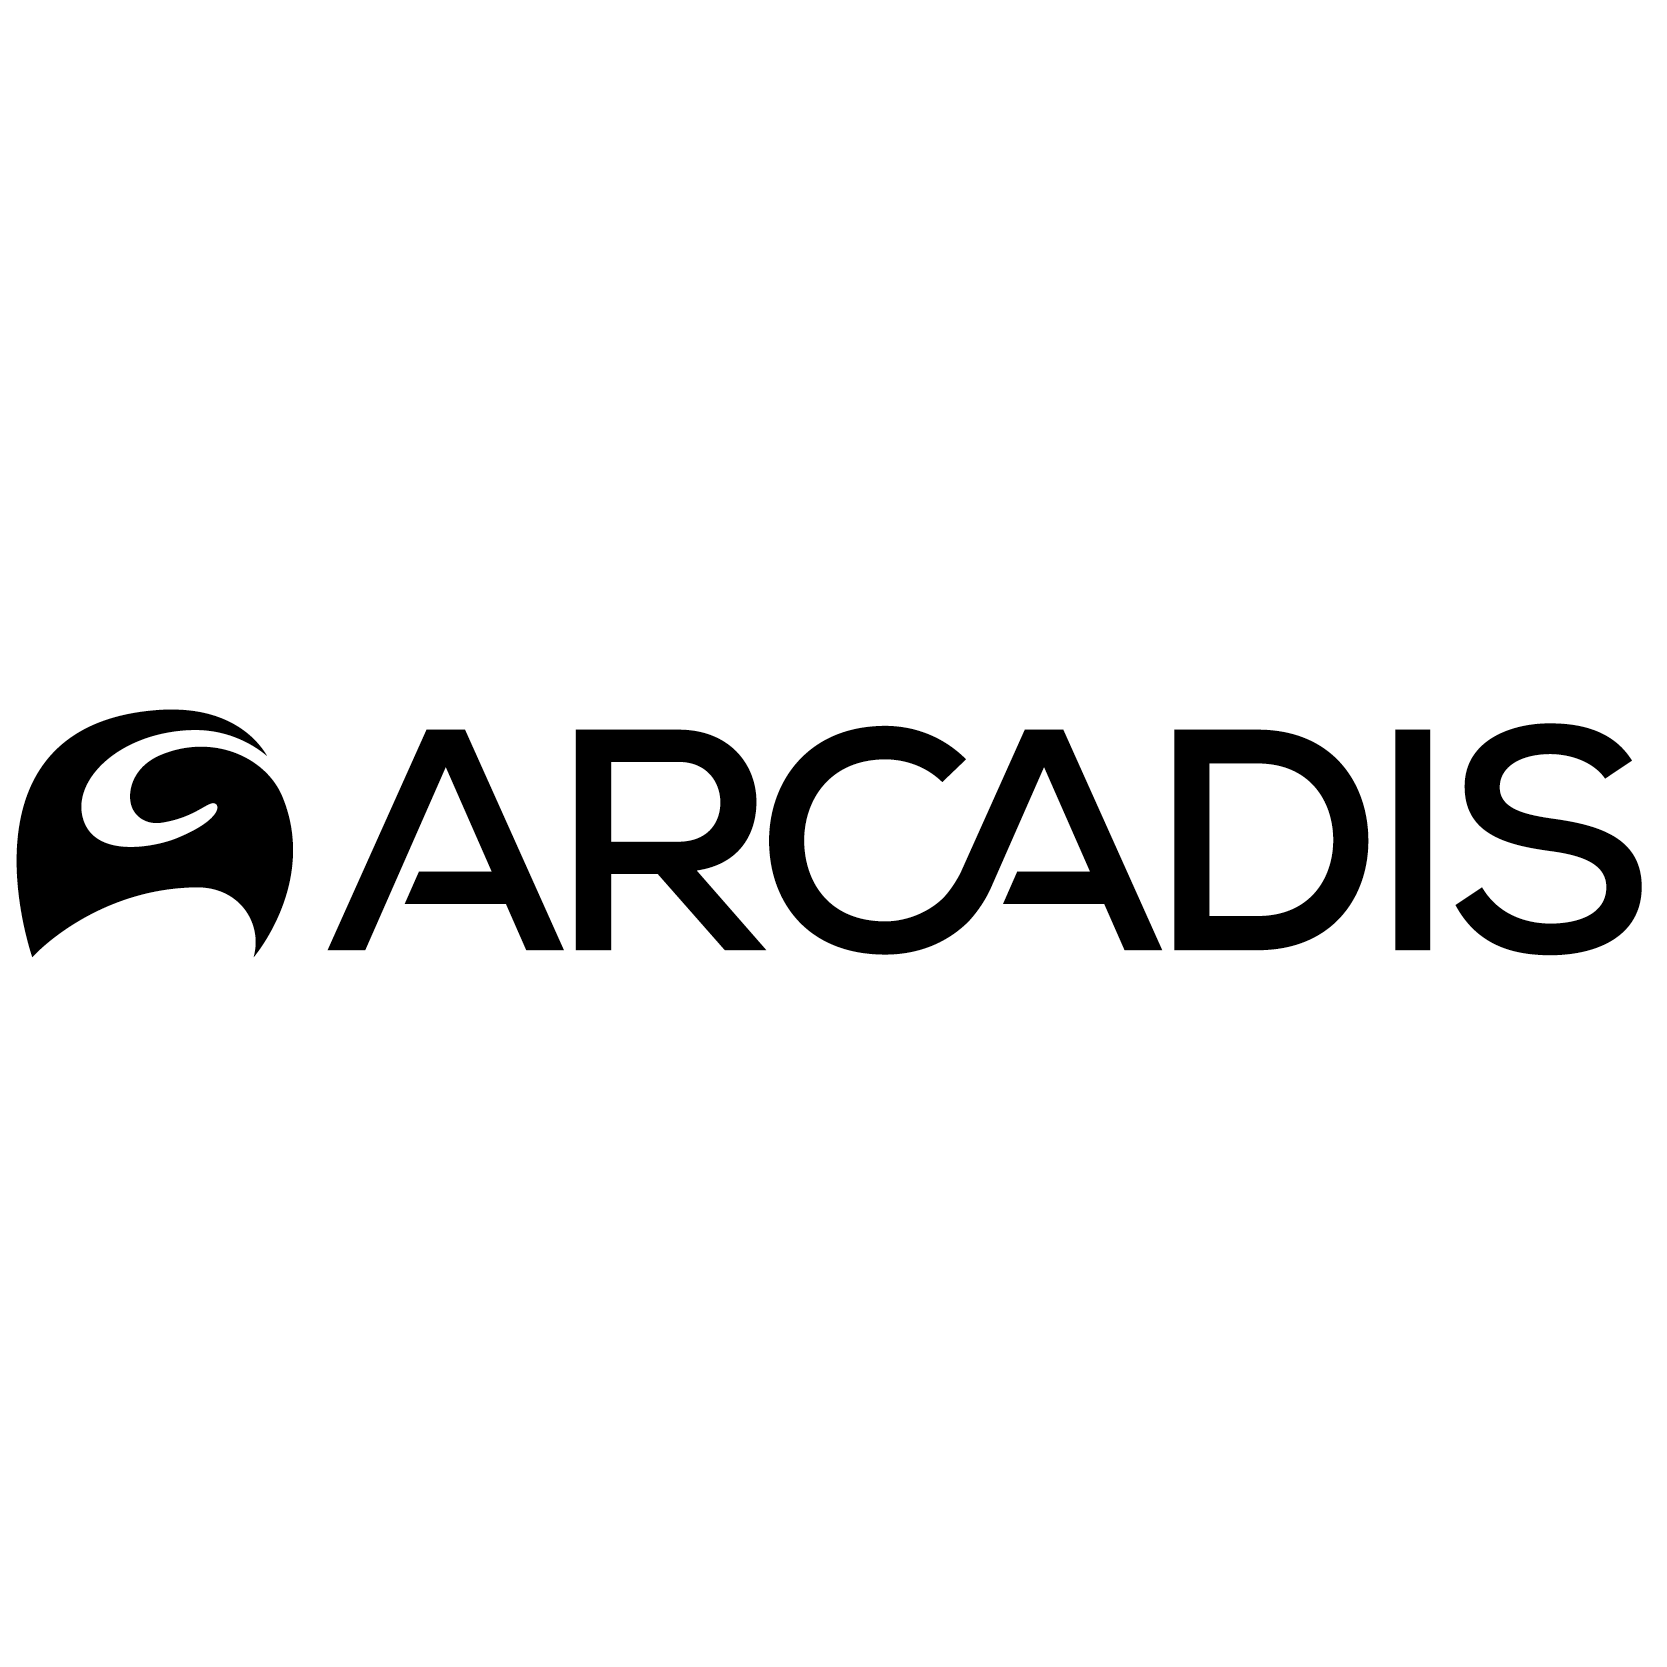 Arcads logo BW tile 400px.png